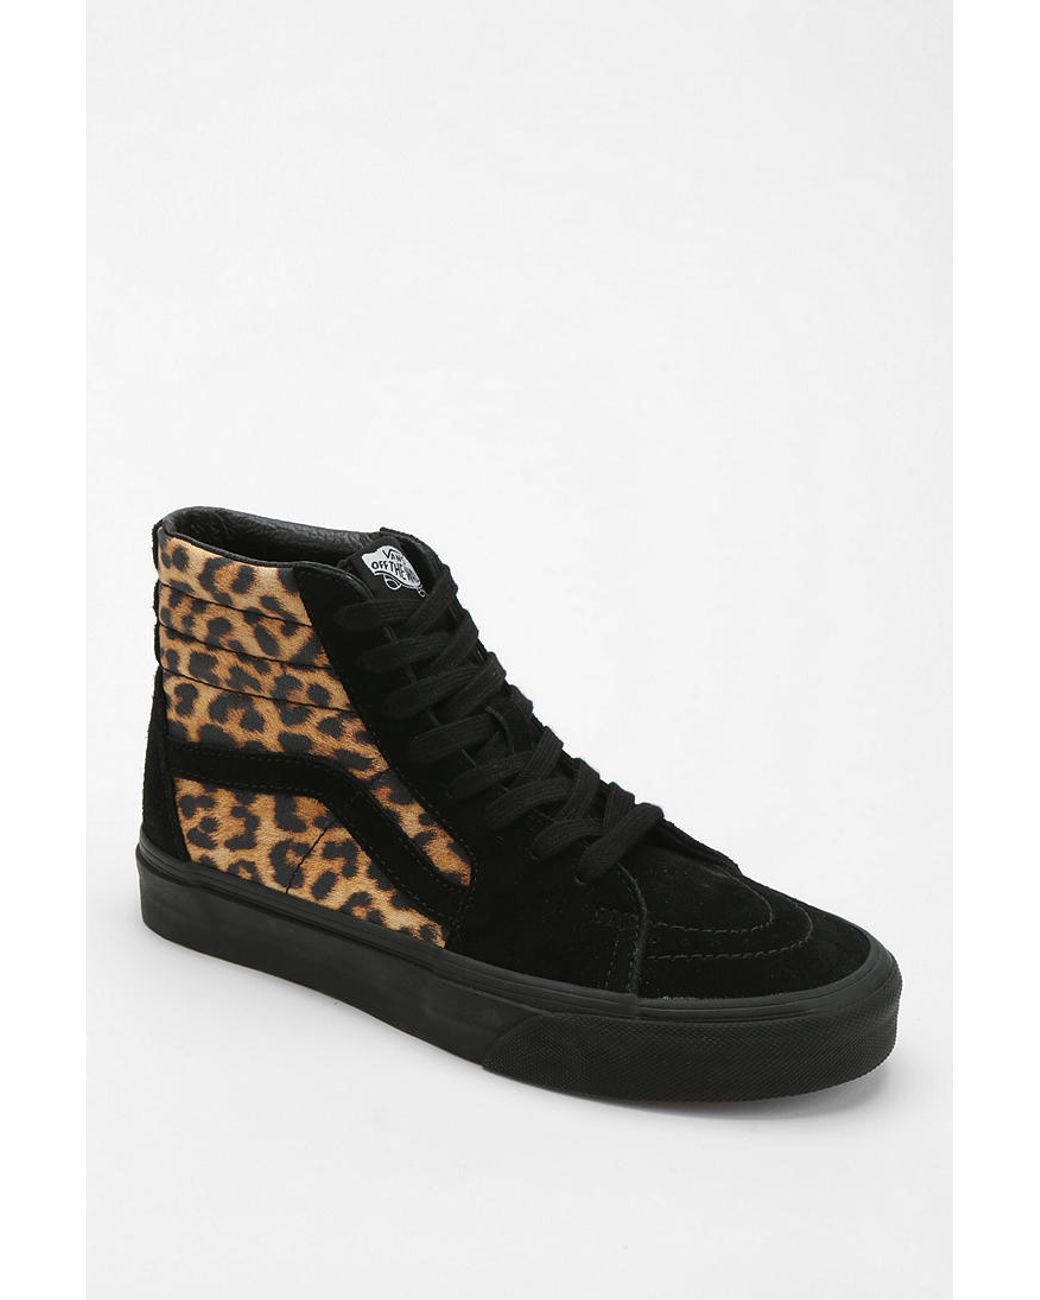 Urban Outfitters Vans Sk8-Hi Leopard Print Women's High-Top Sneaker | Lyst